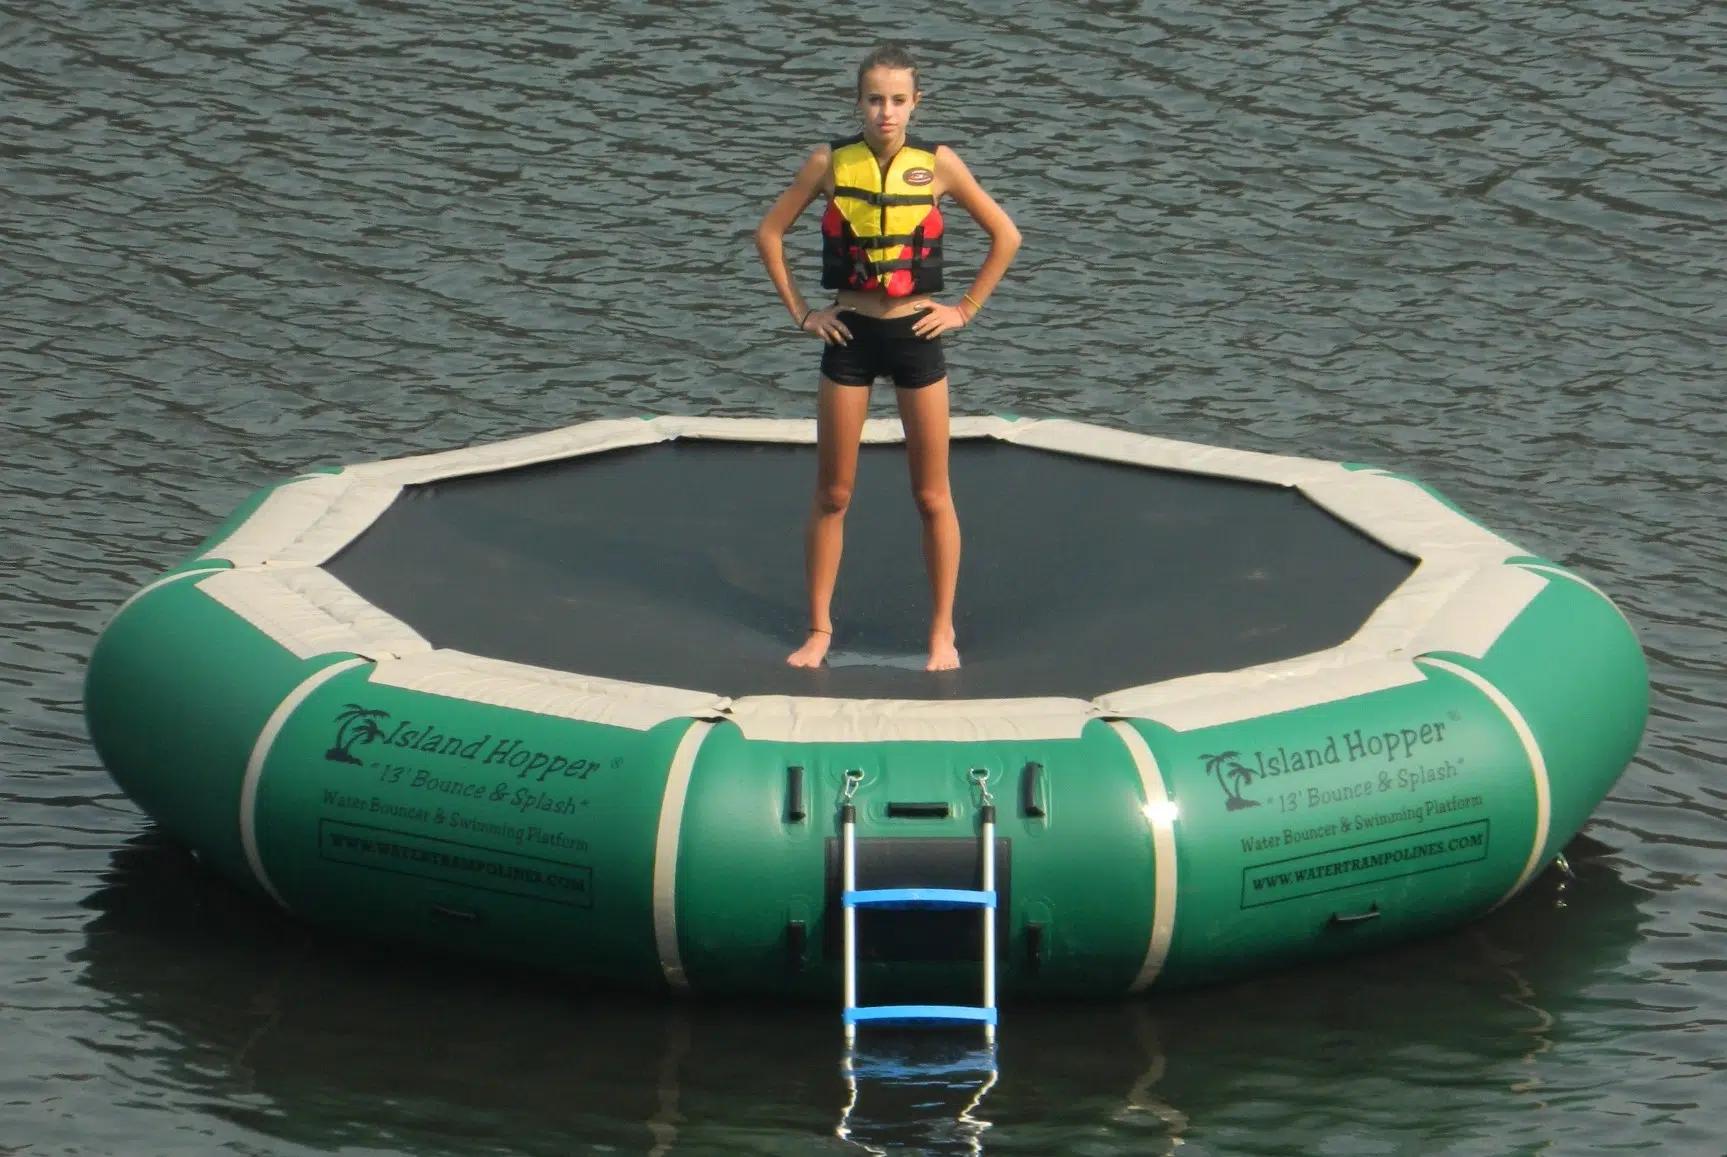 13 Foot Island Hopper Bounce N Splash Water Trampoline in Natural Green